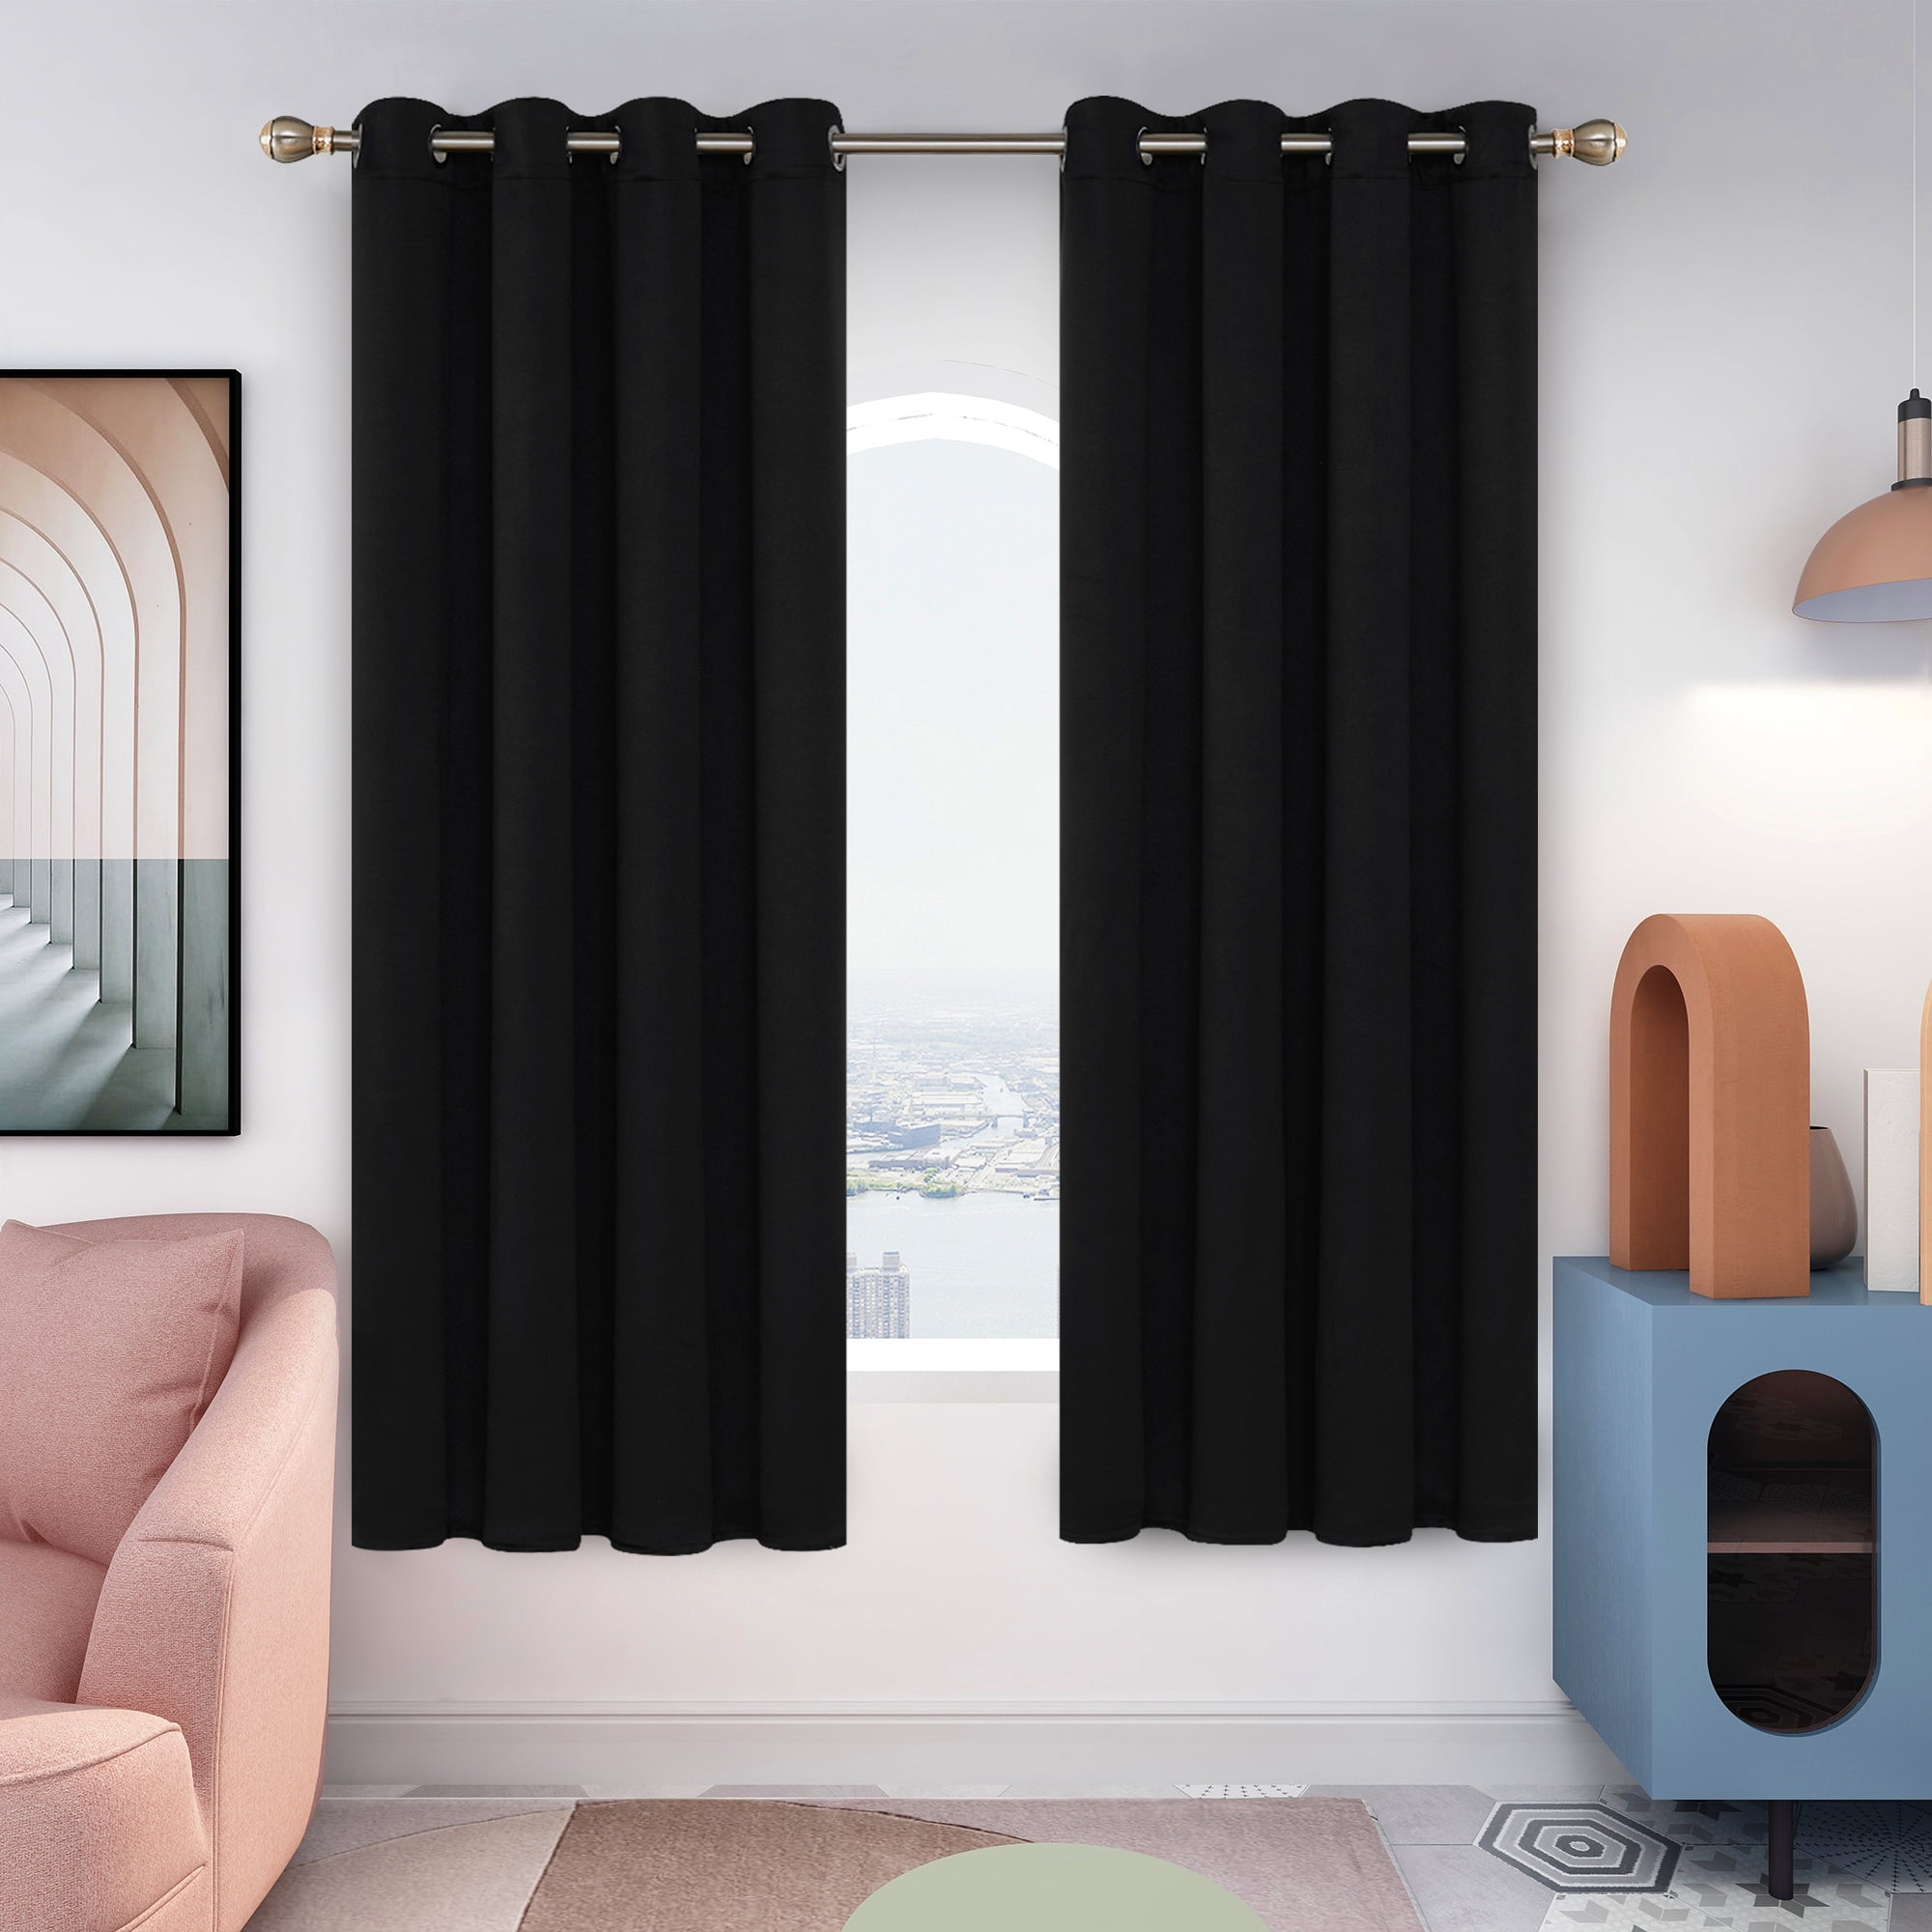 2 Panels Sunny Day Beach 3D Darkening Insulated Blockout Window Curtain Drapes 